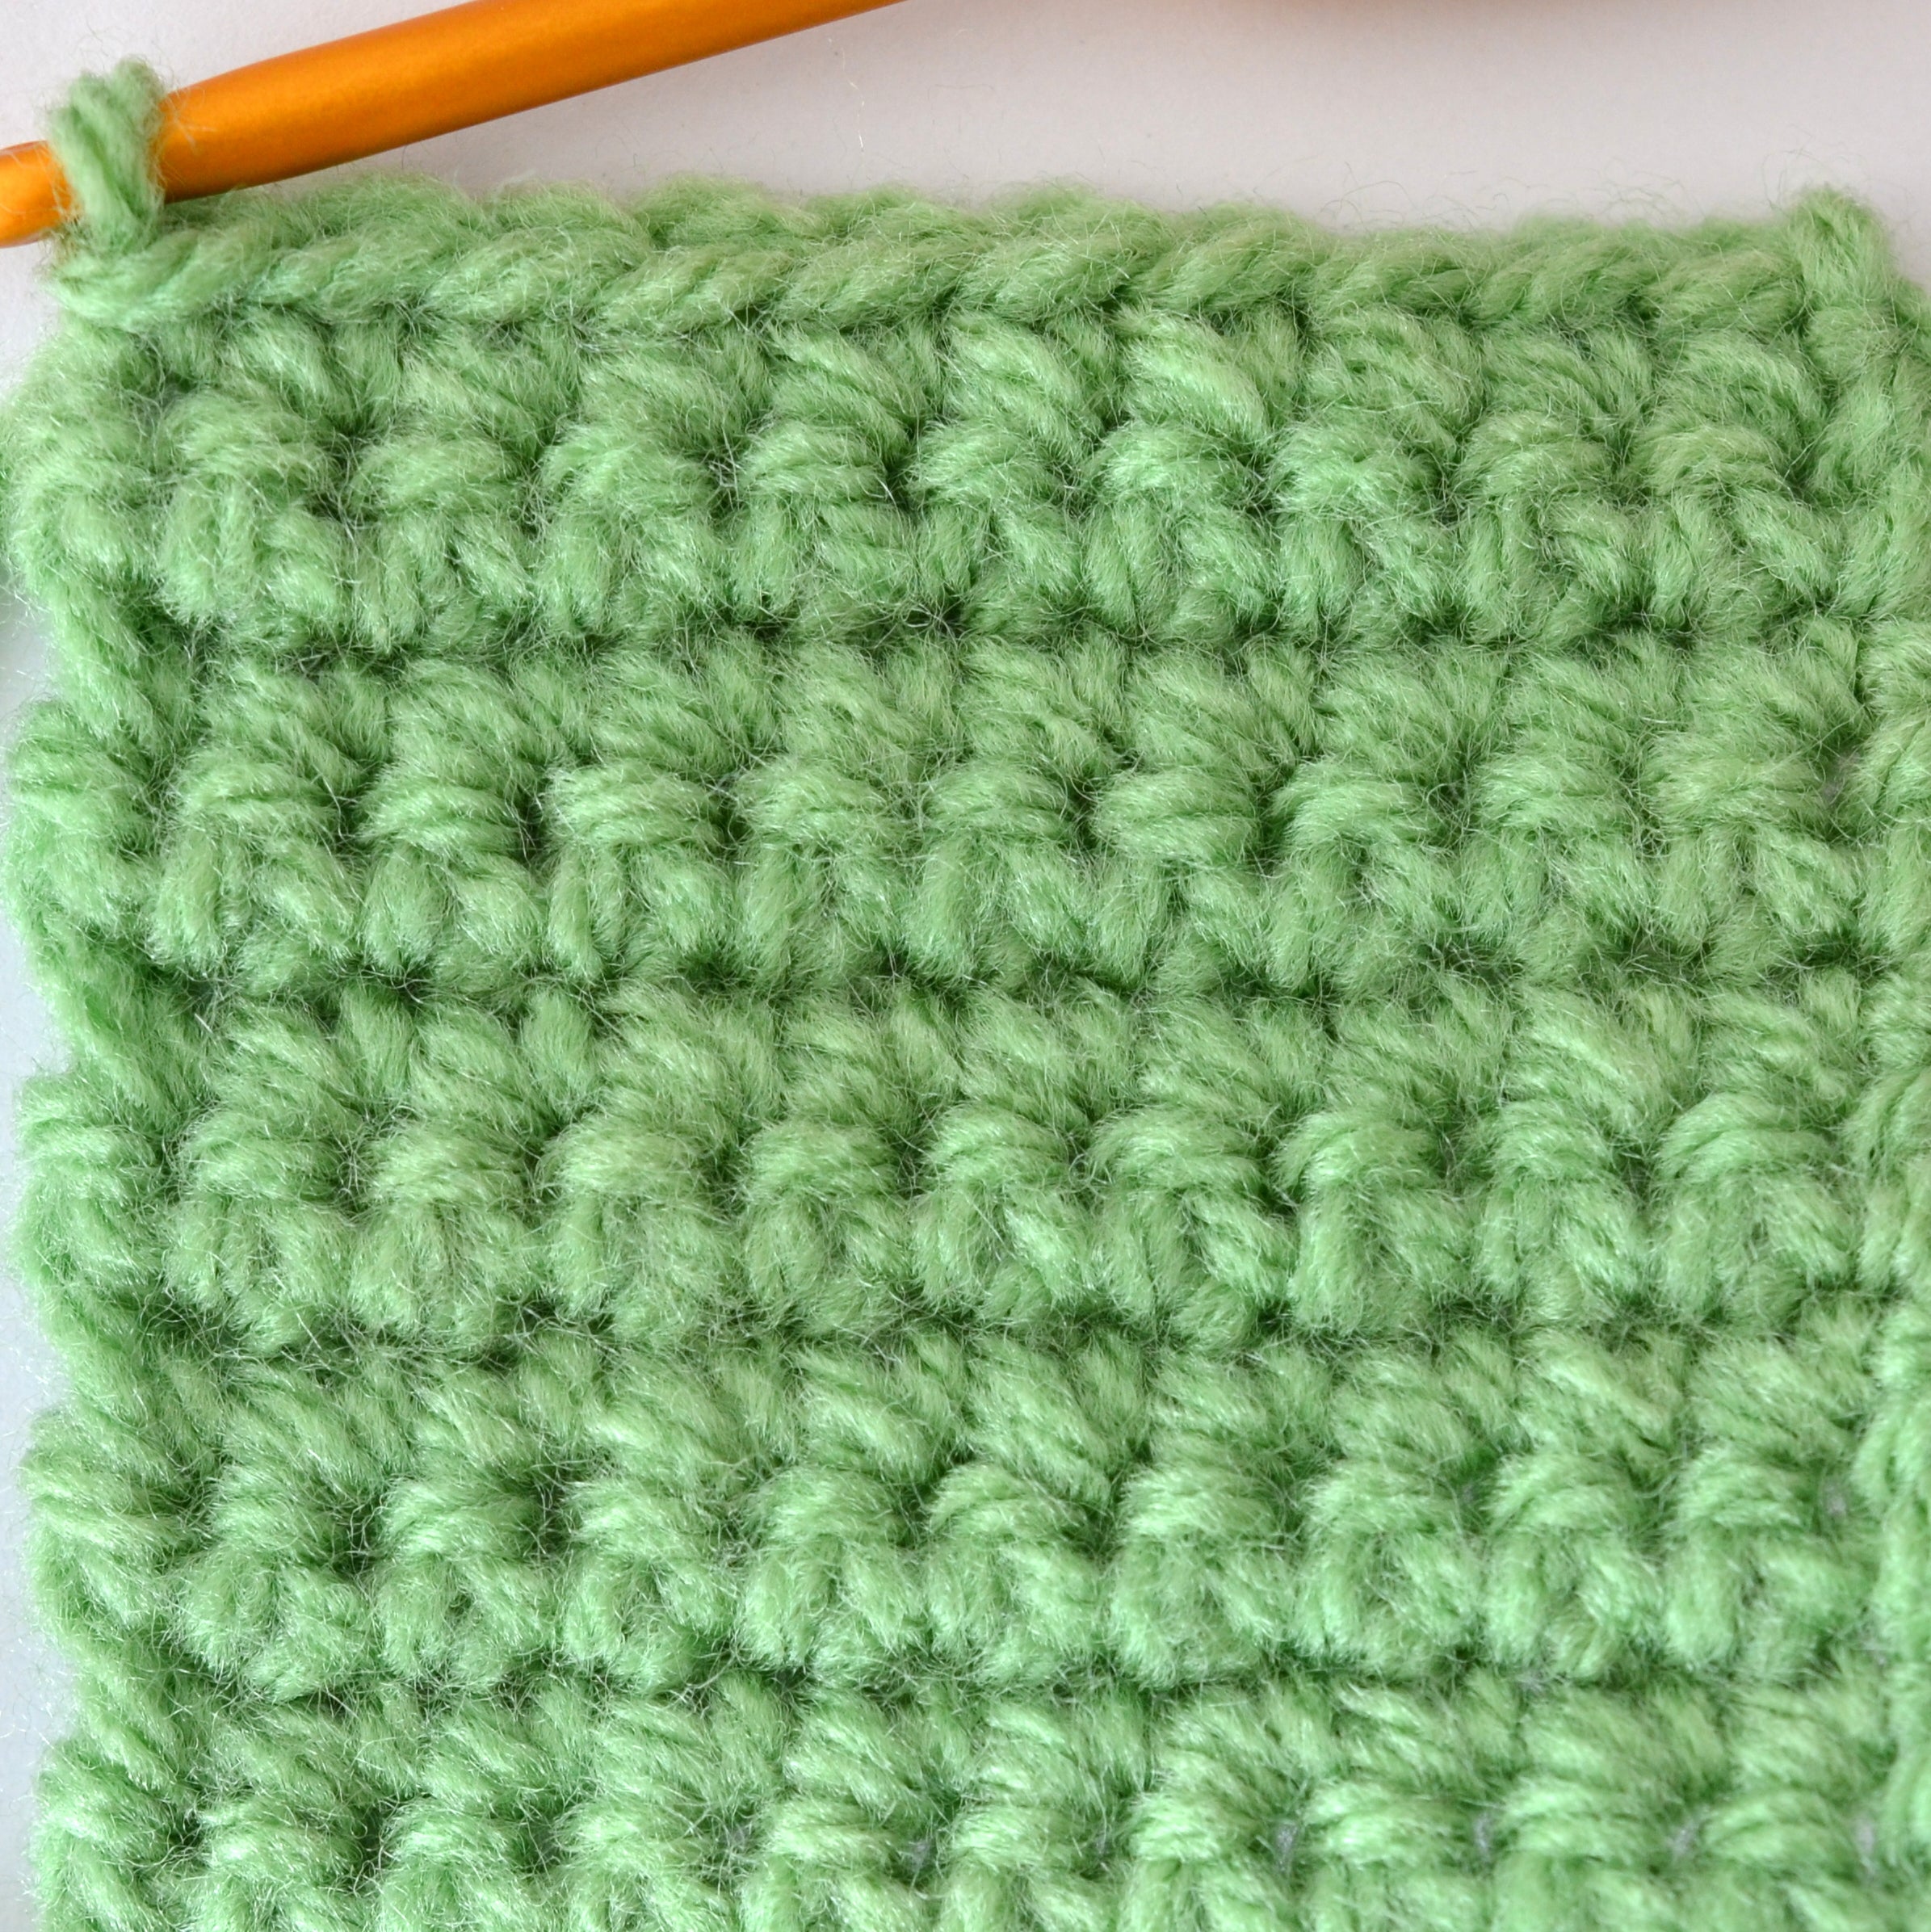 Swatch of crochet fabric